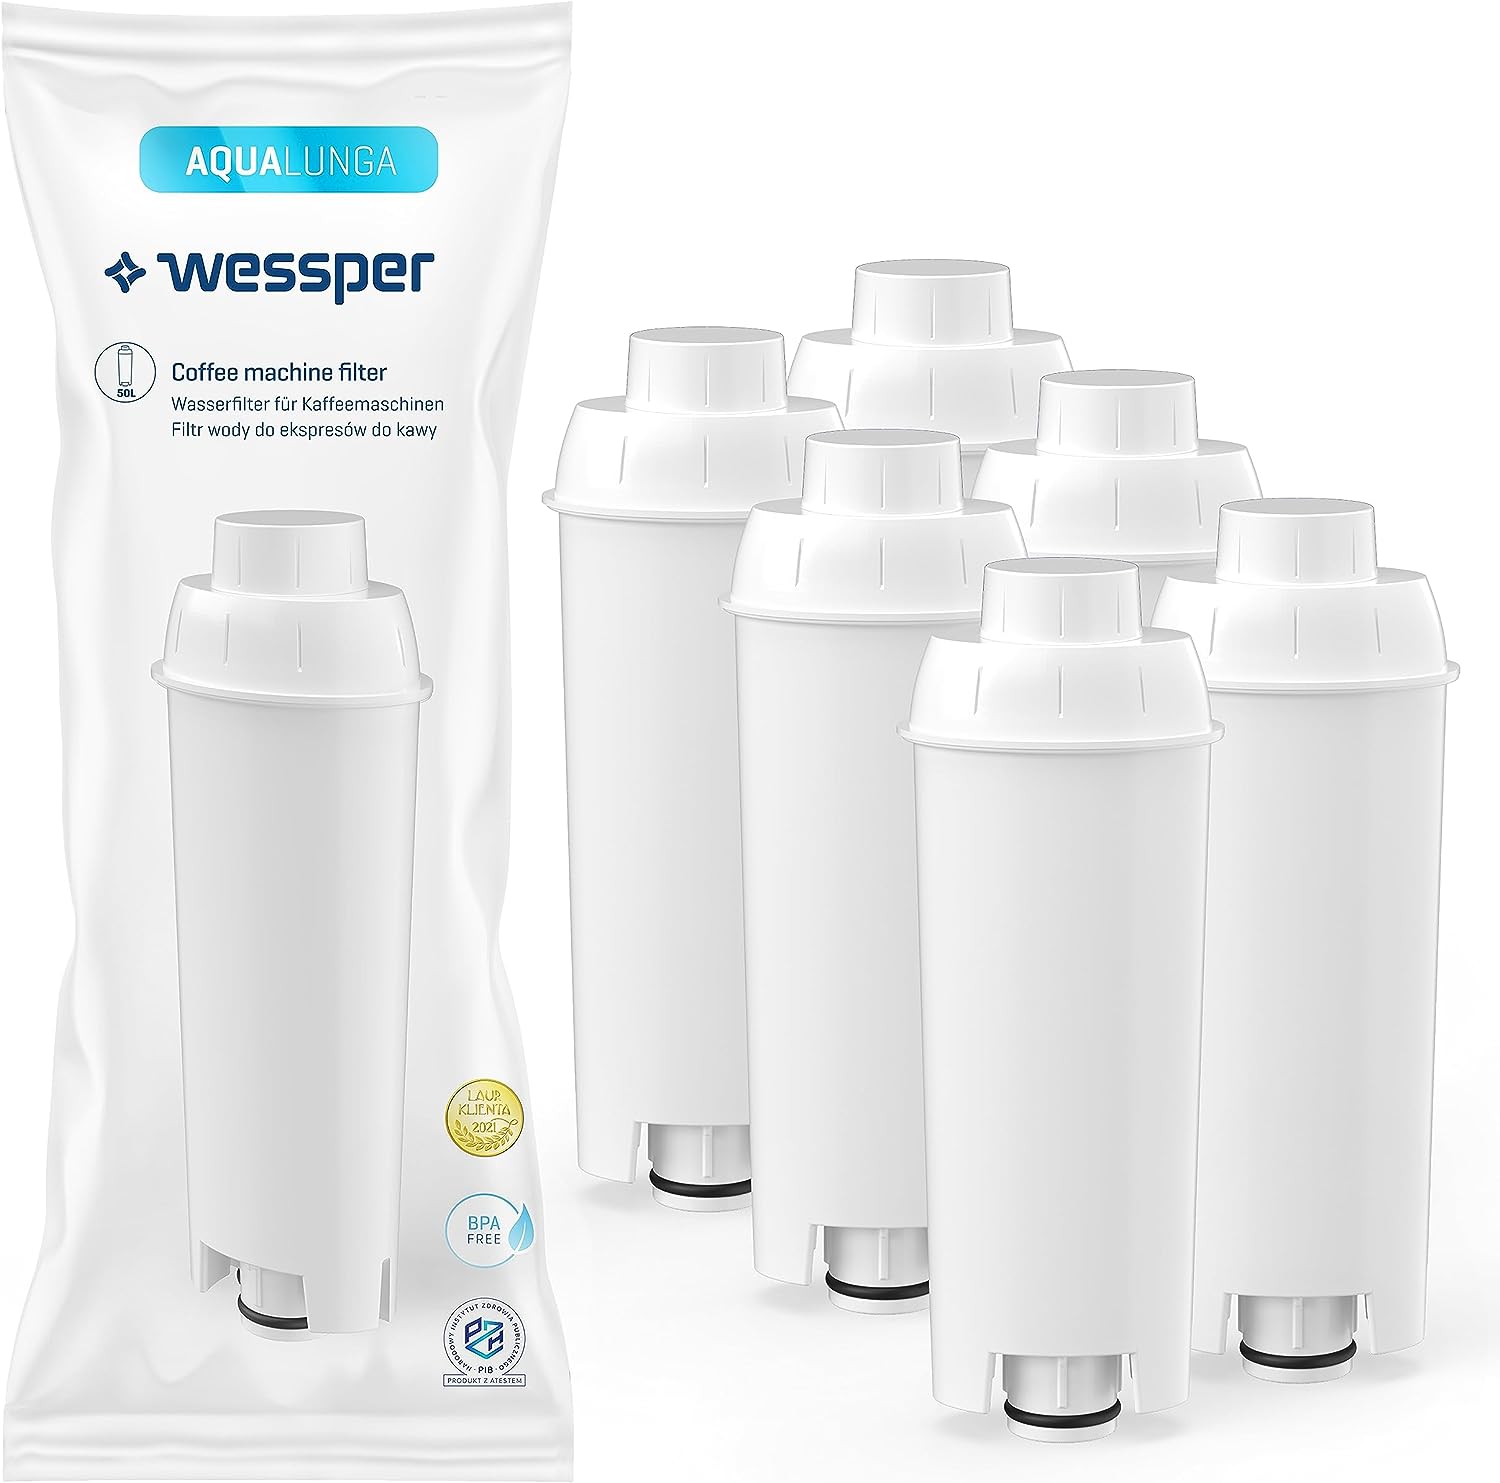 Wessper Aqua Lunga Water Filter for Delonghi Fully Automatic Coffee Machine DLSC002, SER3017 & 5513292811 - Compatible with ECAM, ESAM, ETAM, SECAM Series (Pack of 6)